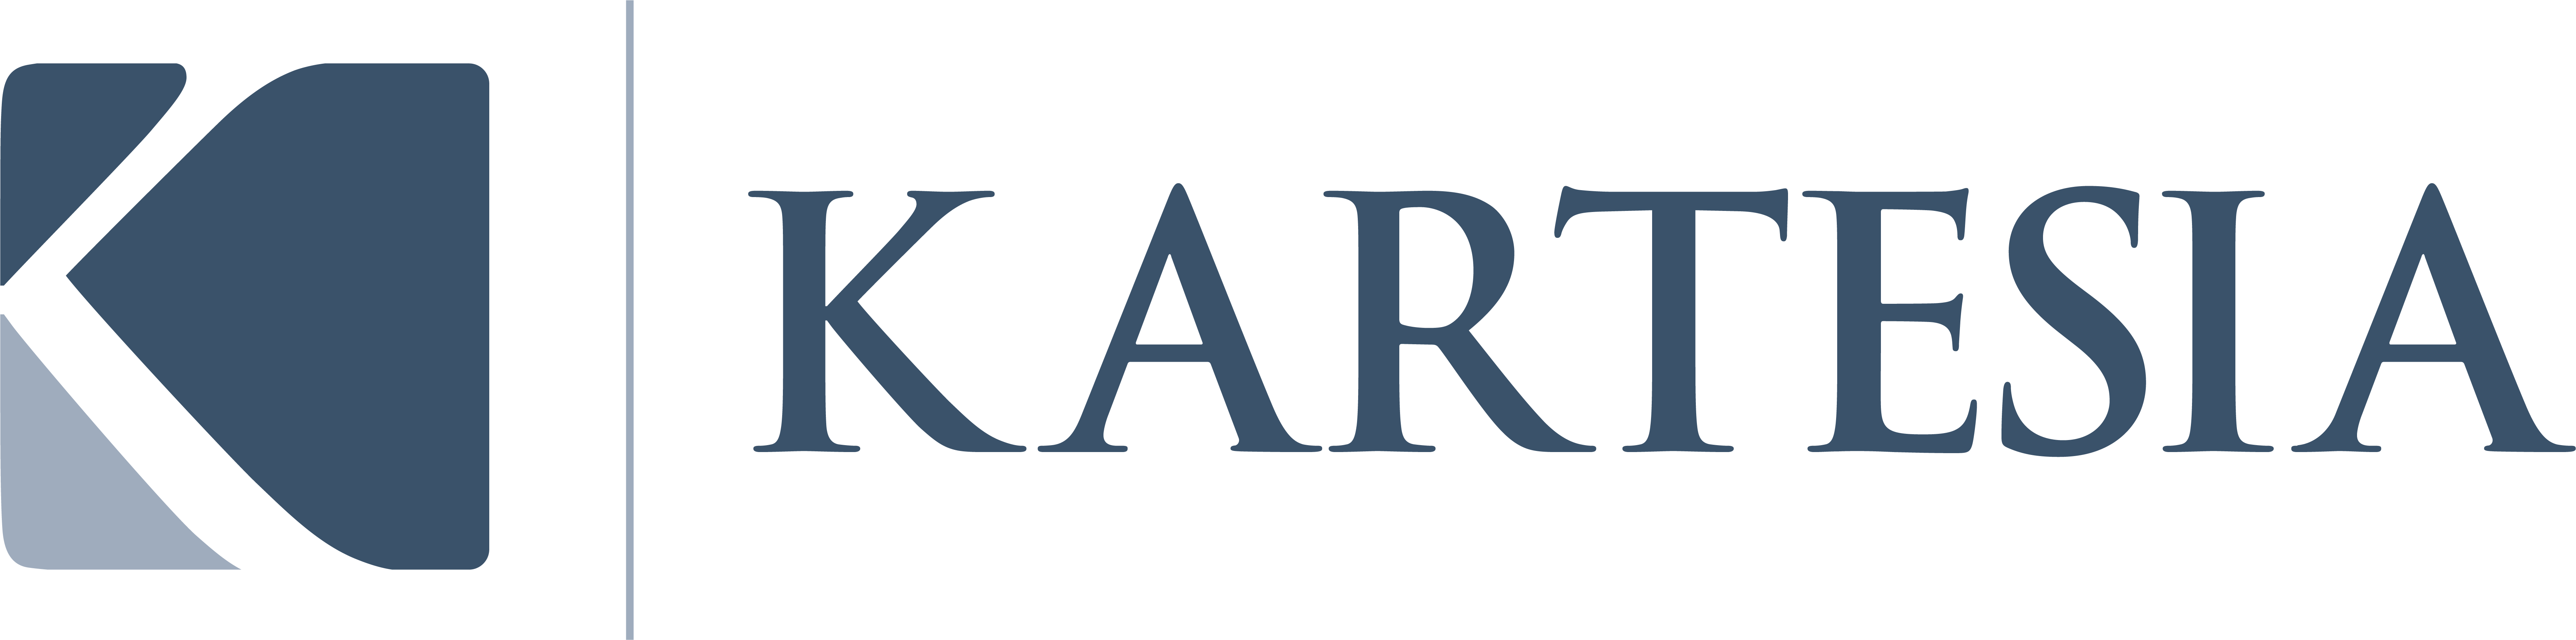 Kartesian logo